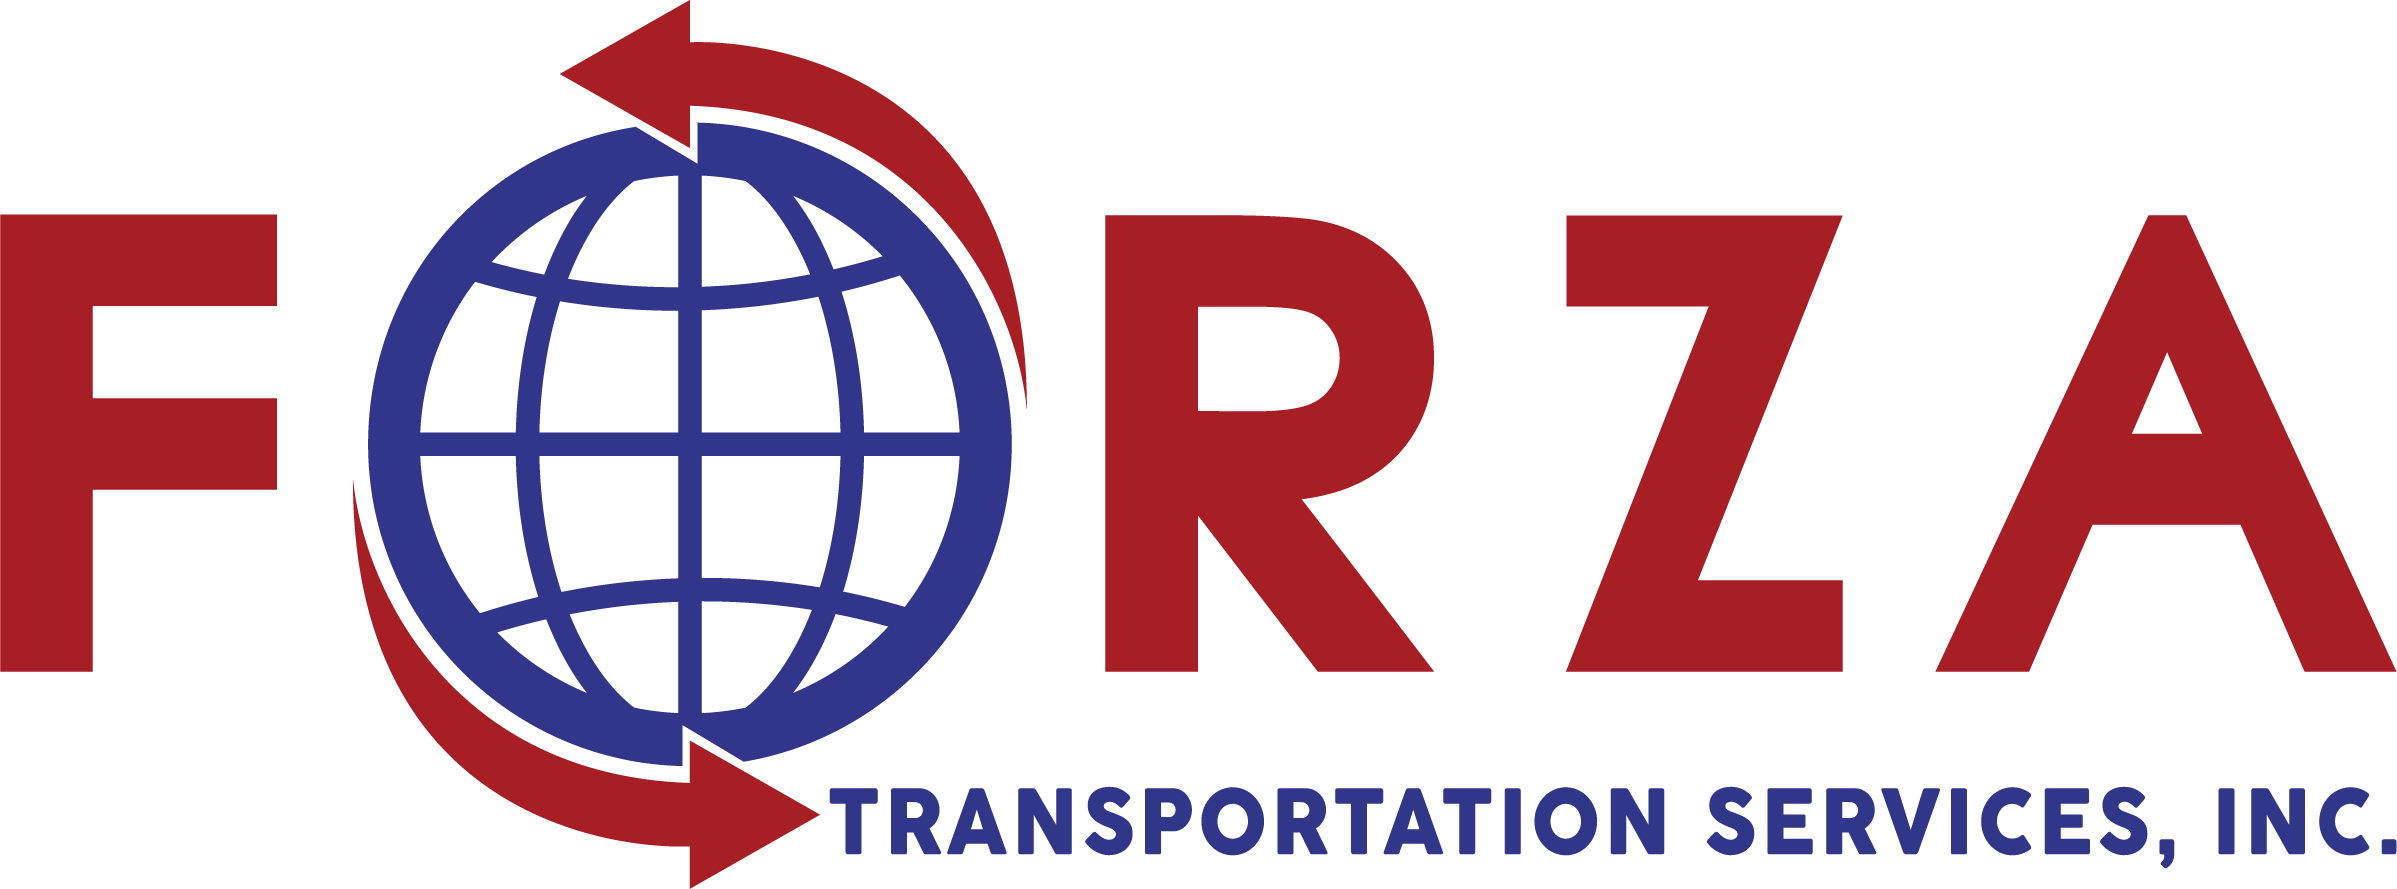 Forza Transportation Services, Inc.